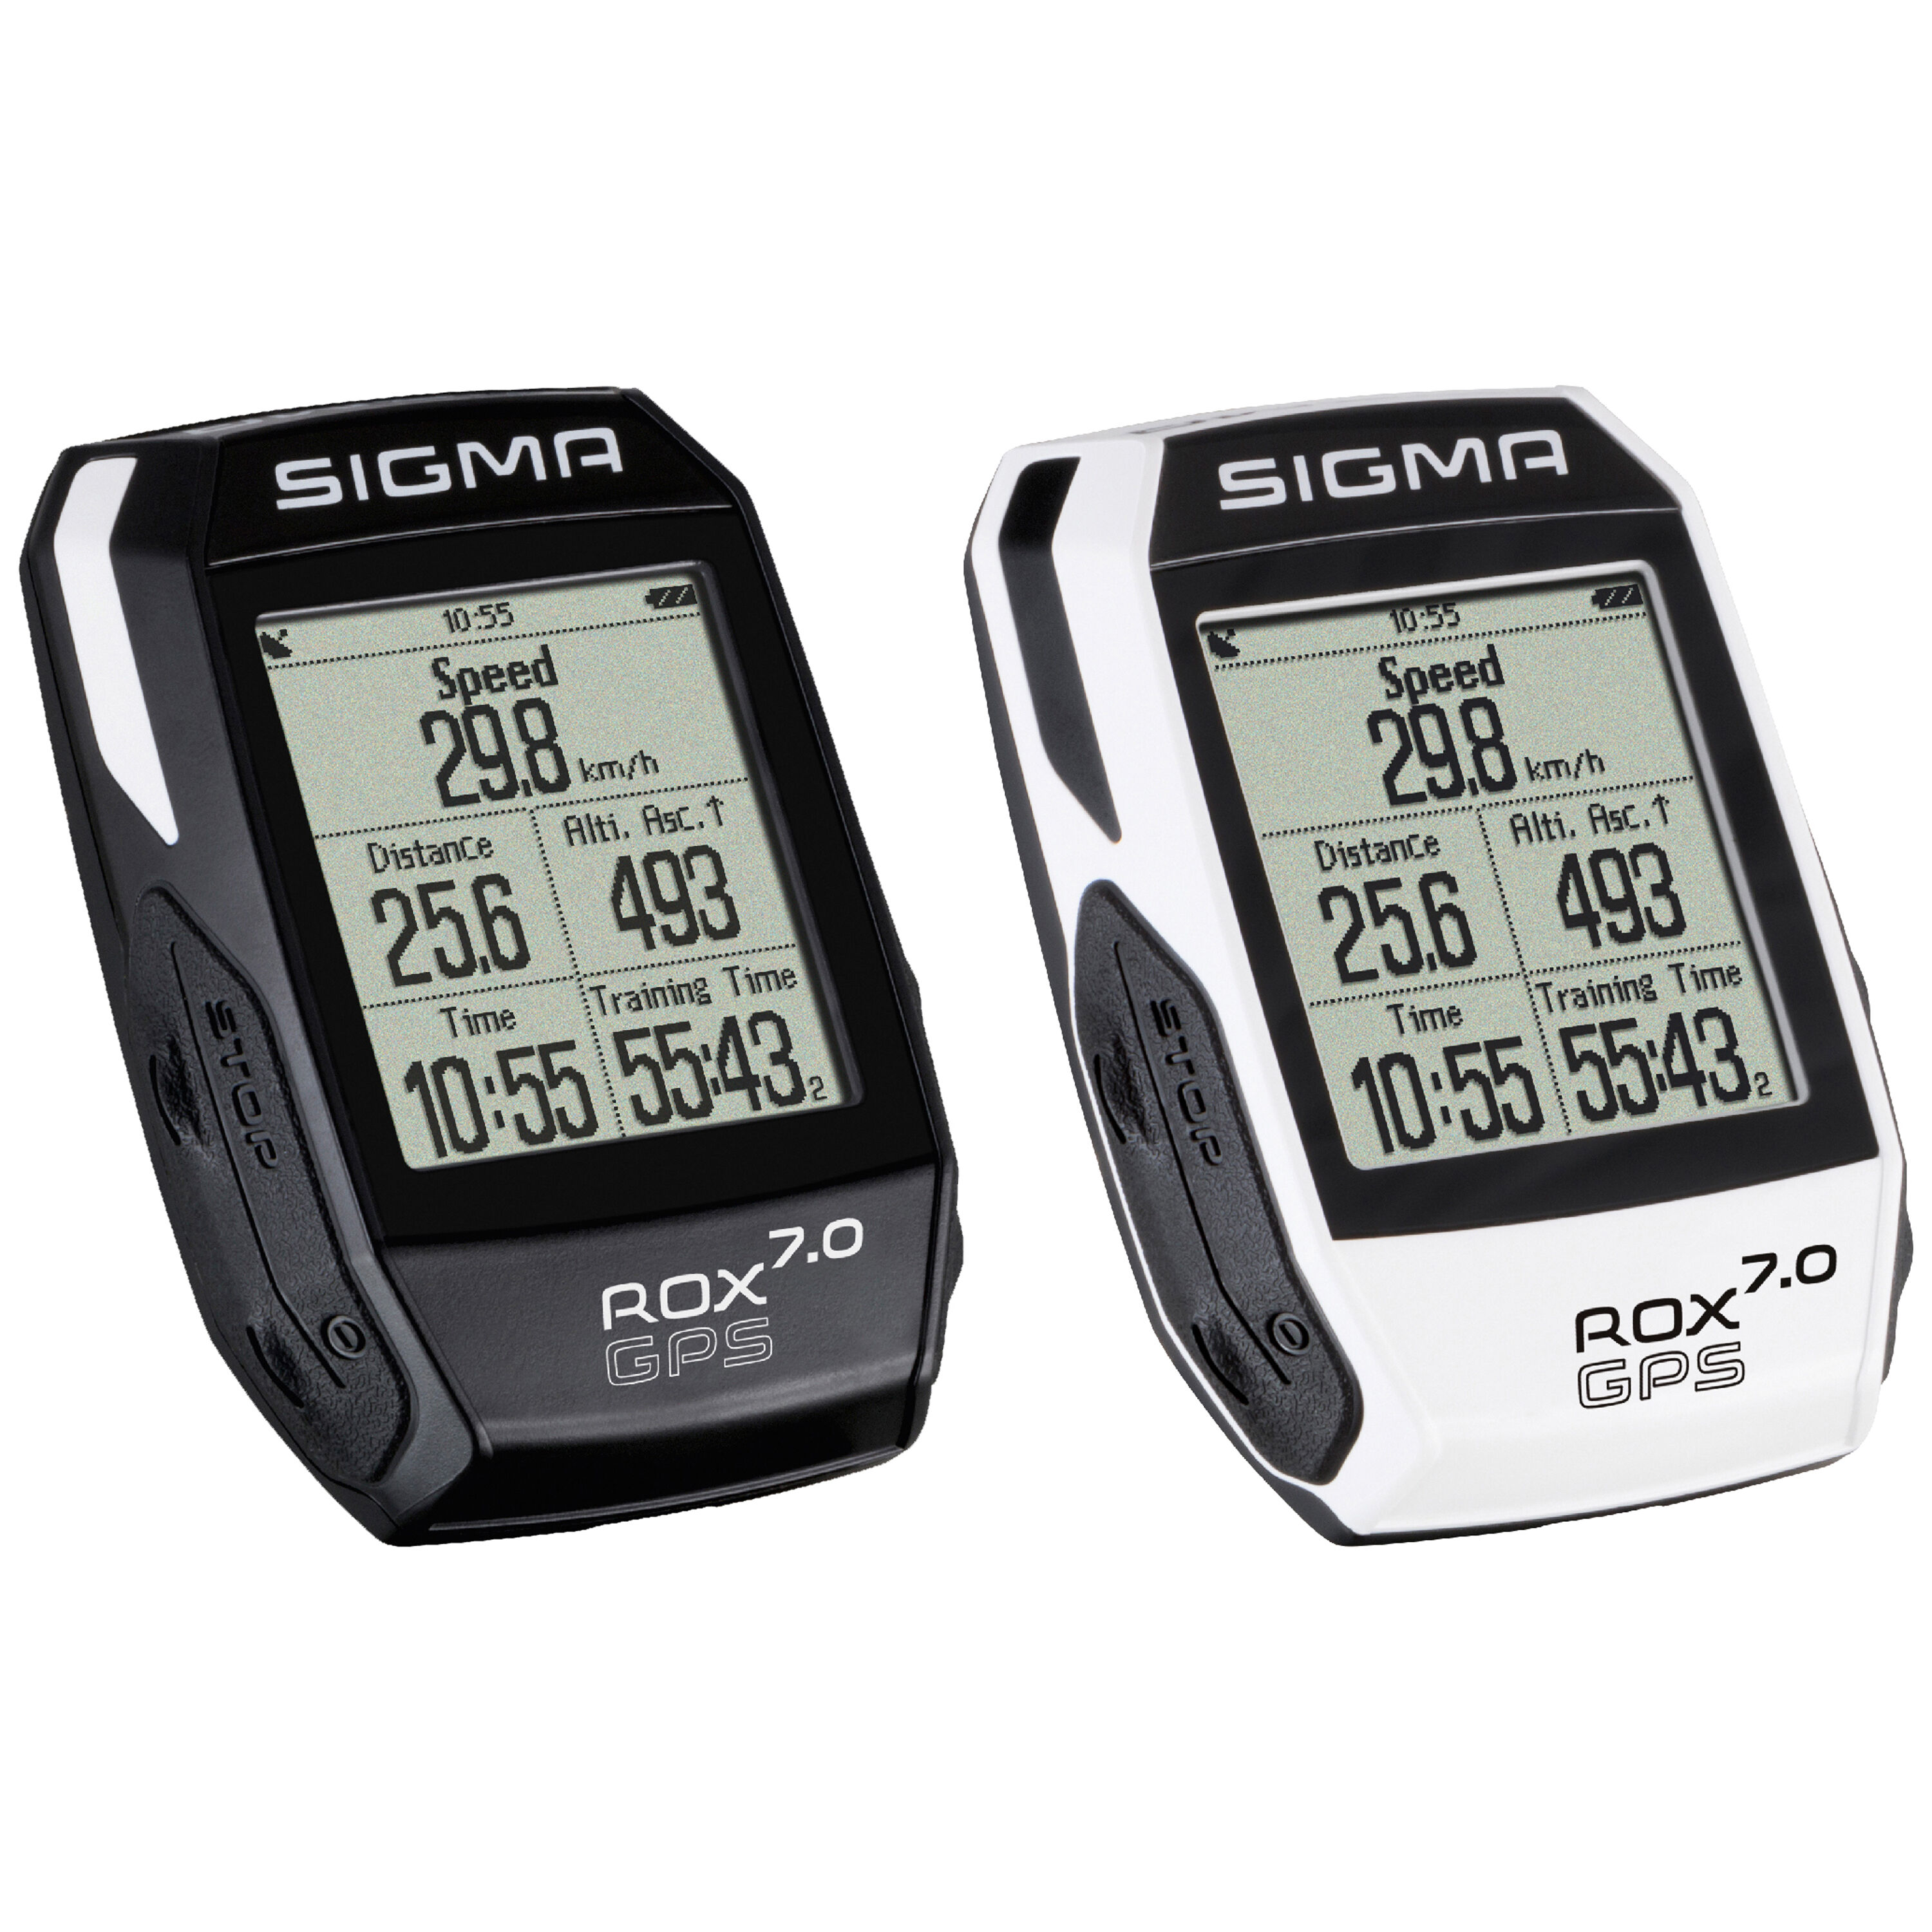 Sigma 7.0 GPS LordGun online store